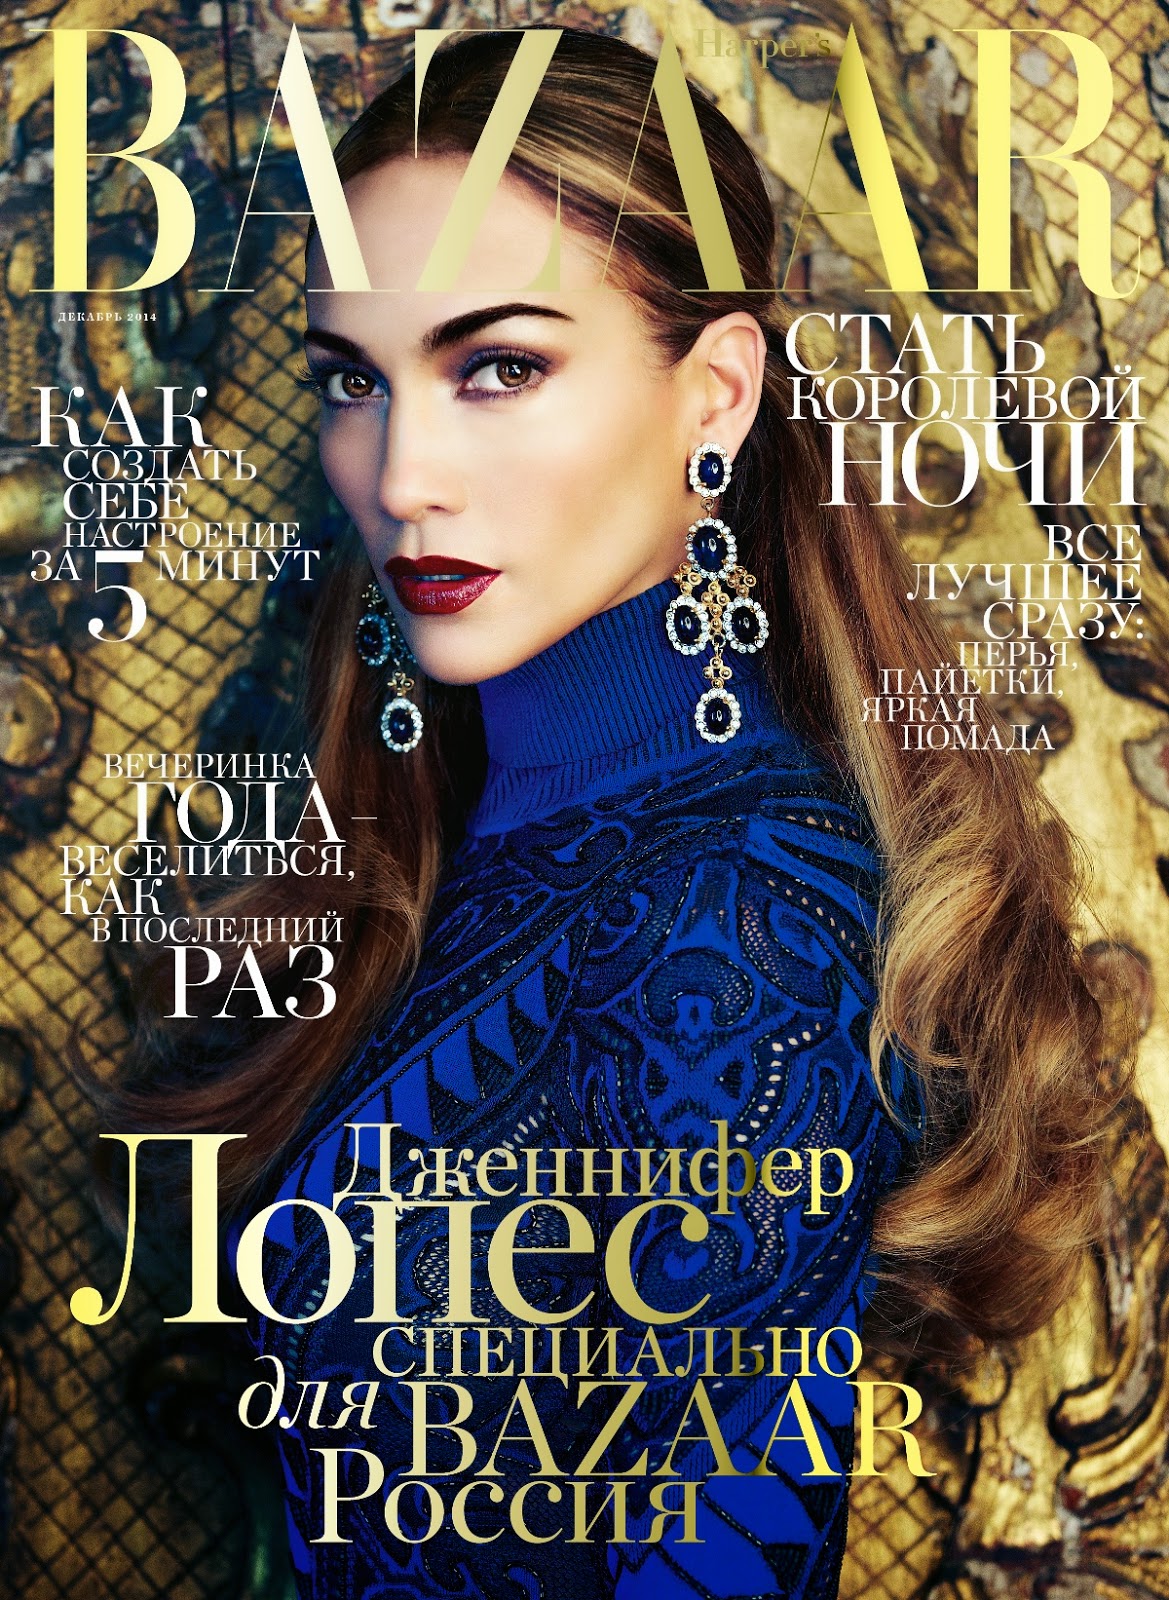 Jennifer Lopez for Harper's Bazaar Russia December 2014 